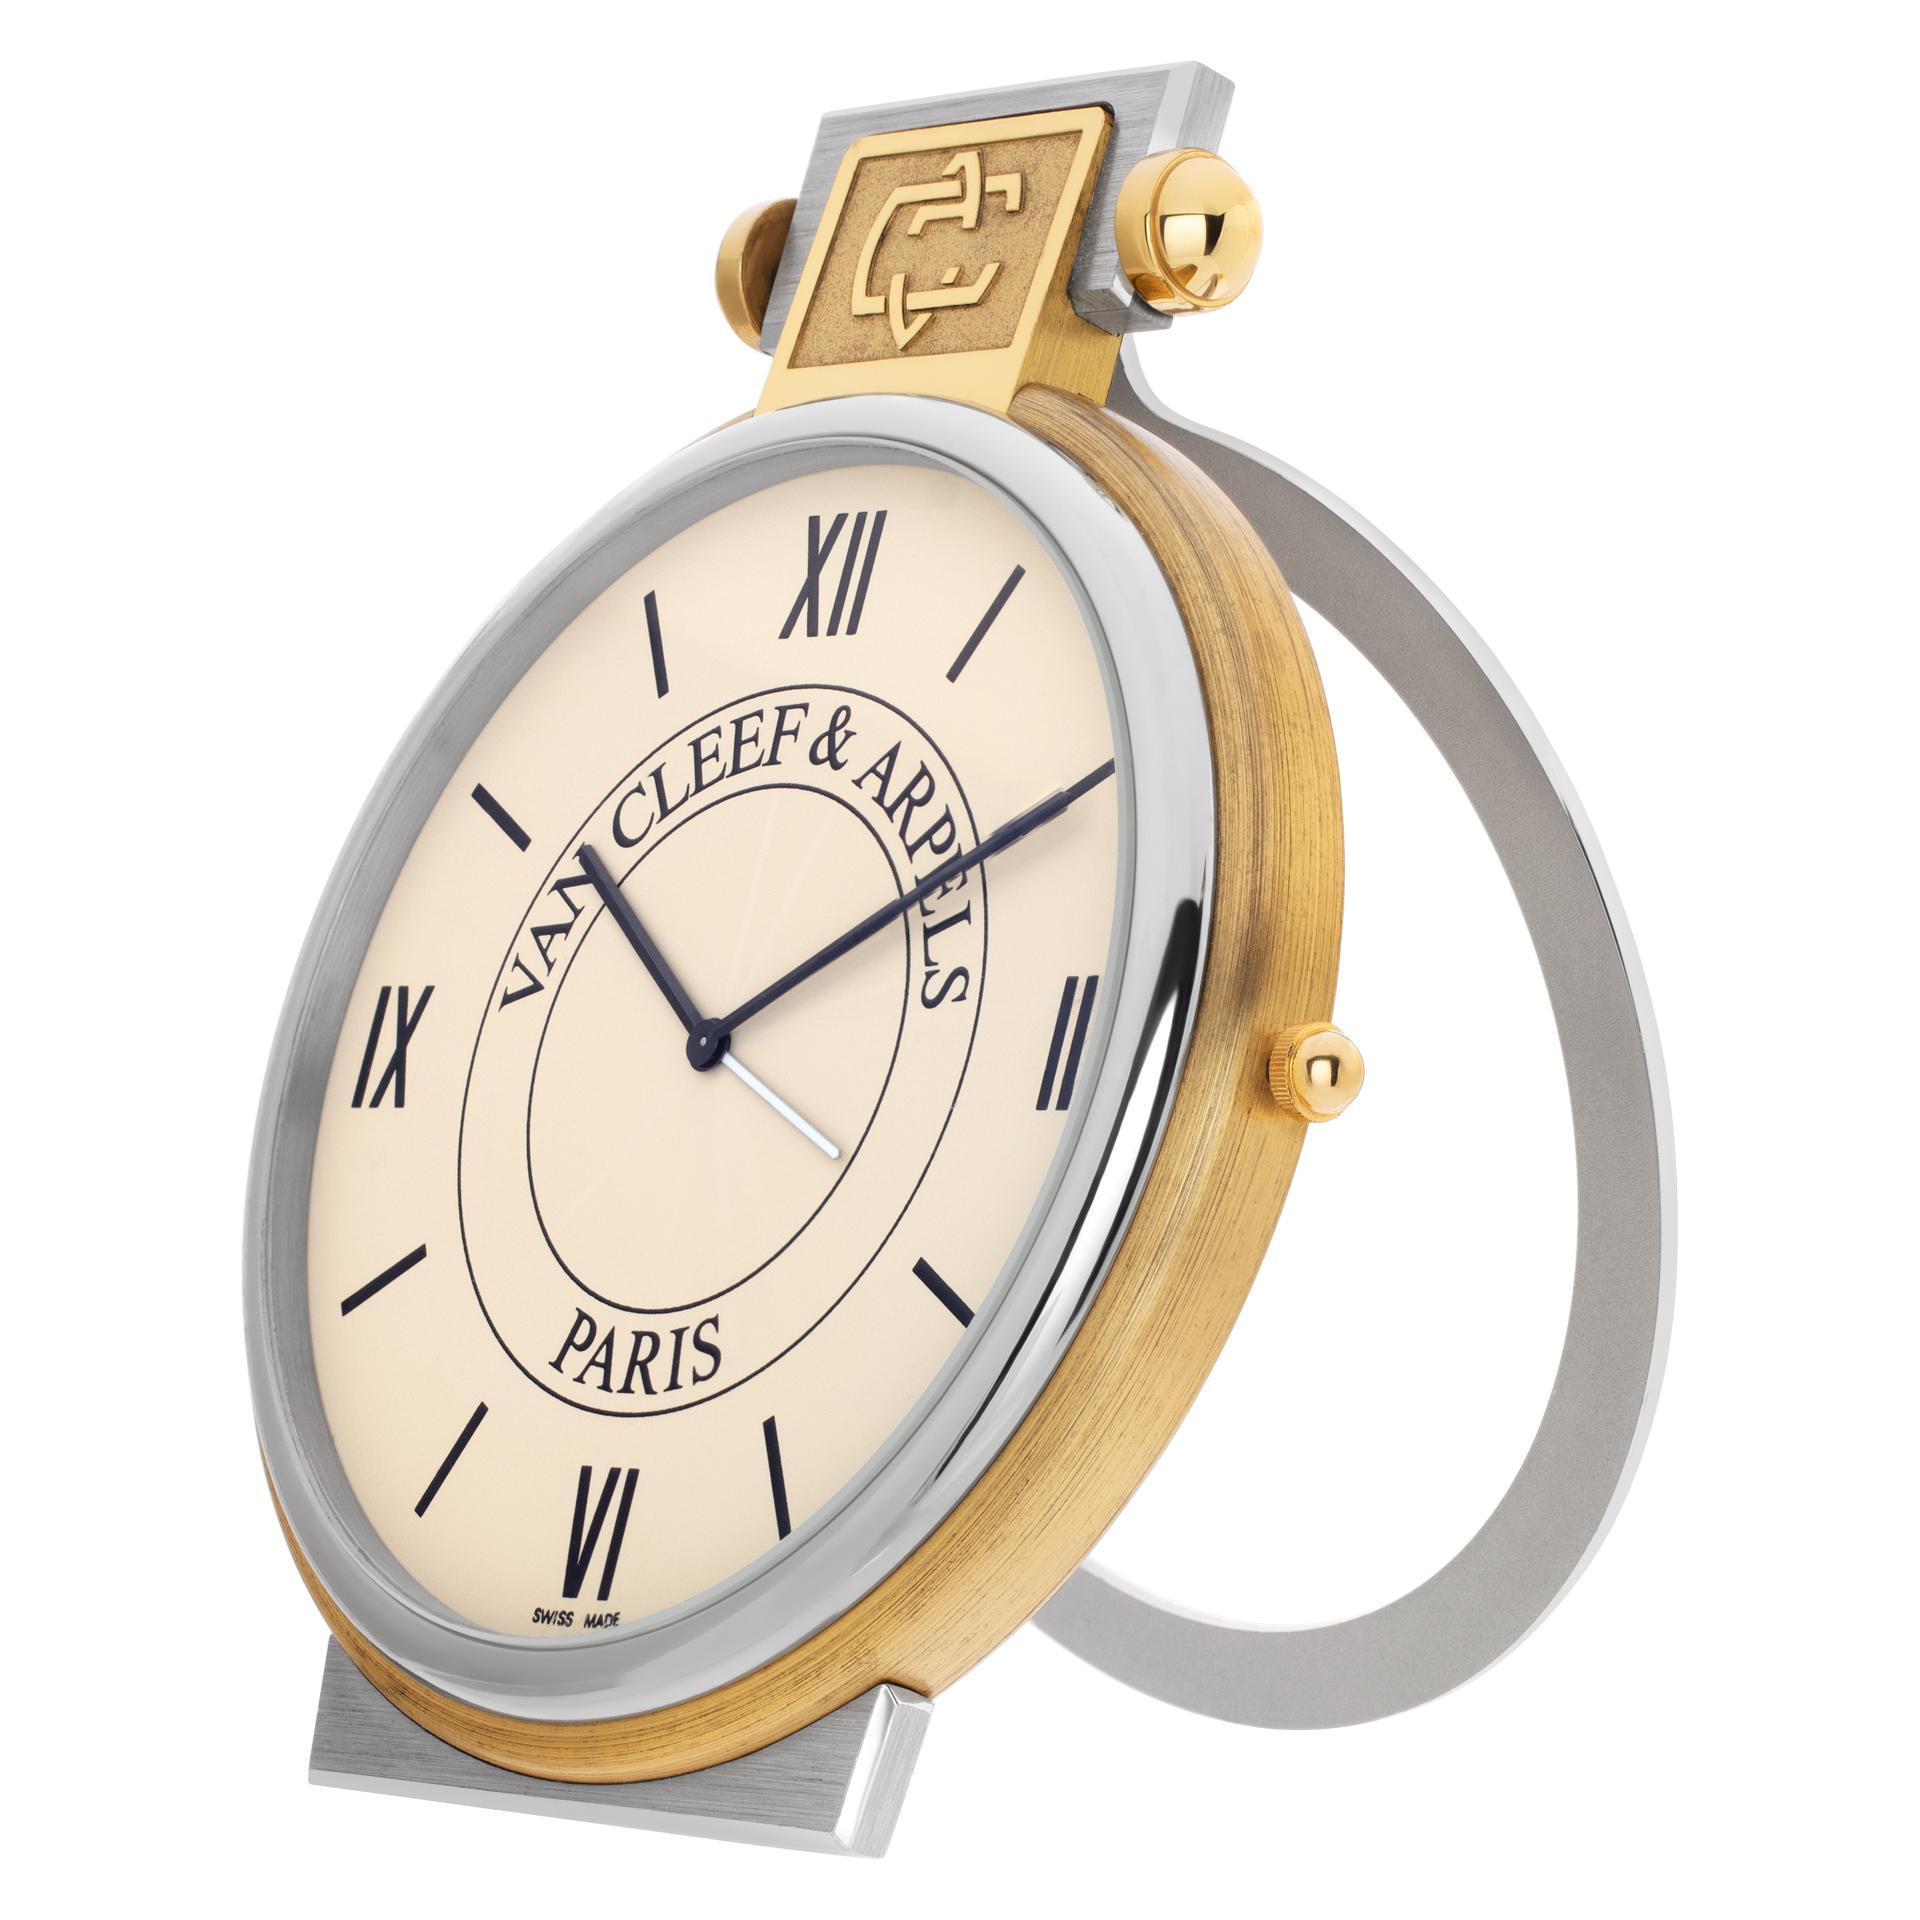 Van Cleef & Arpels No.22 Travel Alarm Clock in gold & stainless steel. Circa 1990s. Quartz. Ref 820.P06. Fine Pre-owned Van Cleef & Arpels Watch. Certified preowned Van Cleef & Arpels Desk Clock 820.P06 watch is made out of yellow gold. This Van